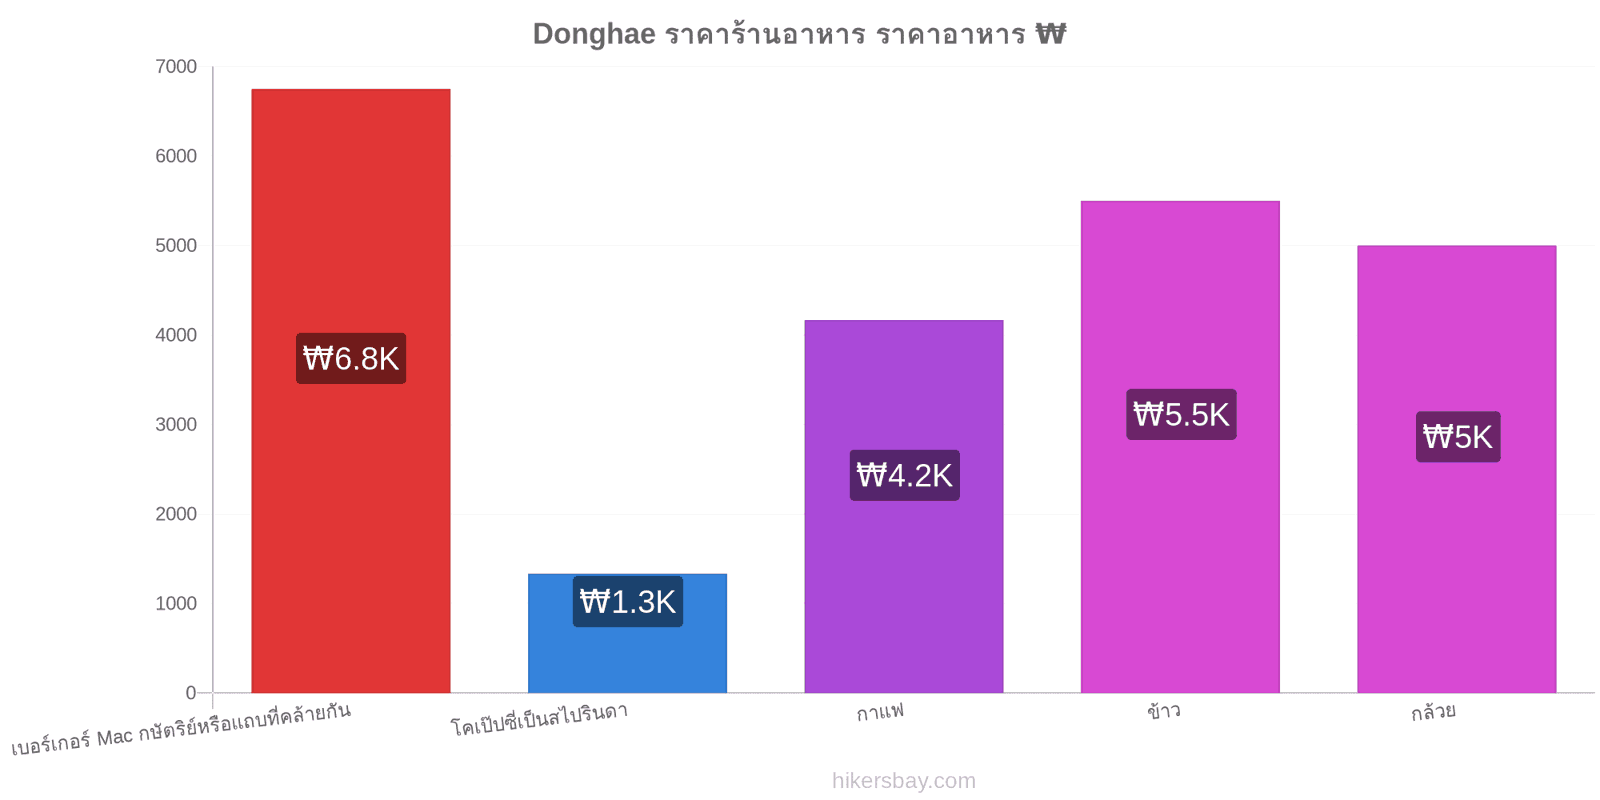 Donghae การเปลี่ยนแปลงราคา hikersbay.com